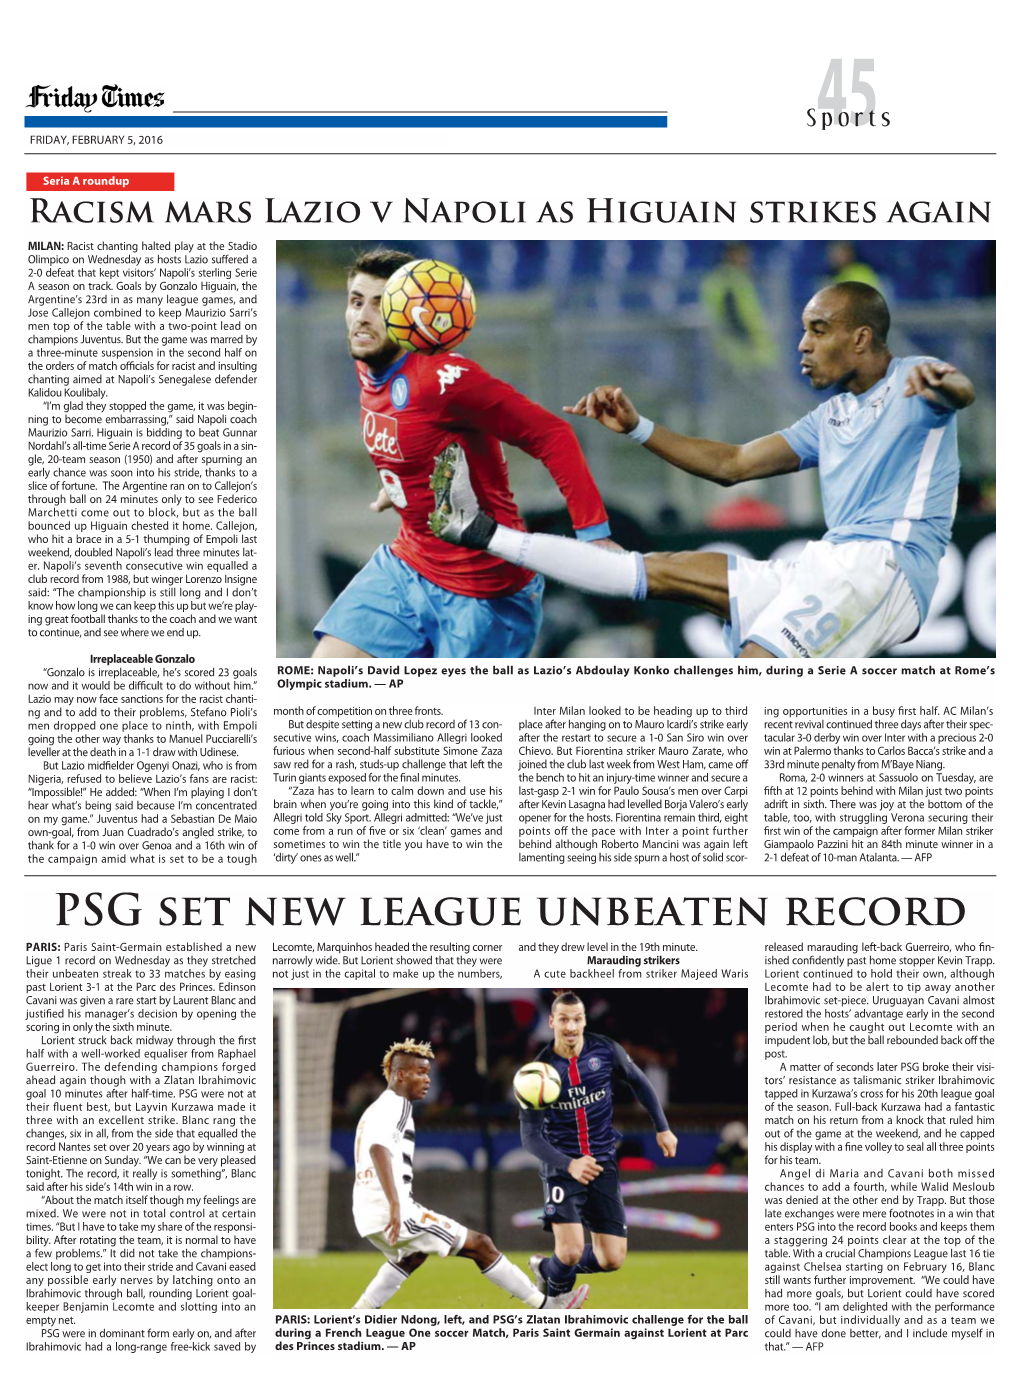 PSG Set New League Unbeaten Record